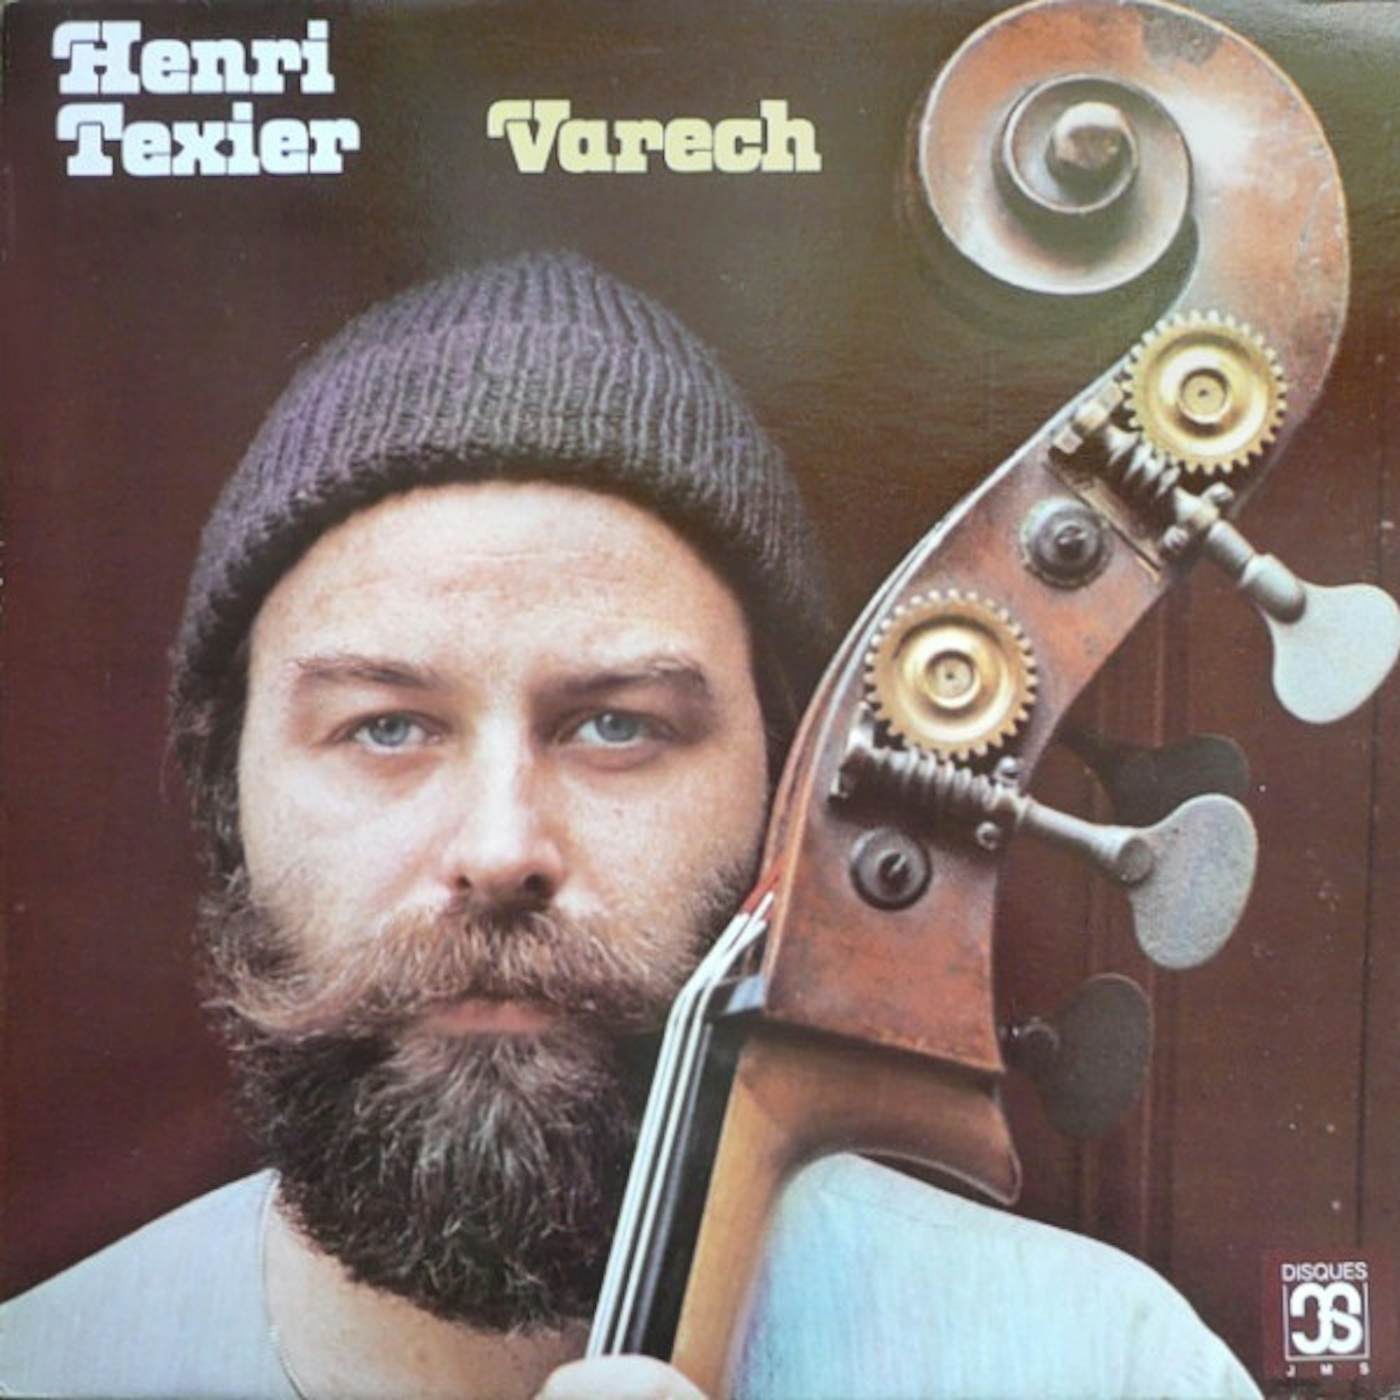 Henri Texier Varech Vinyl Record